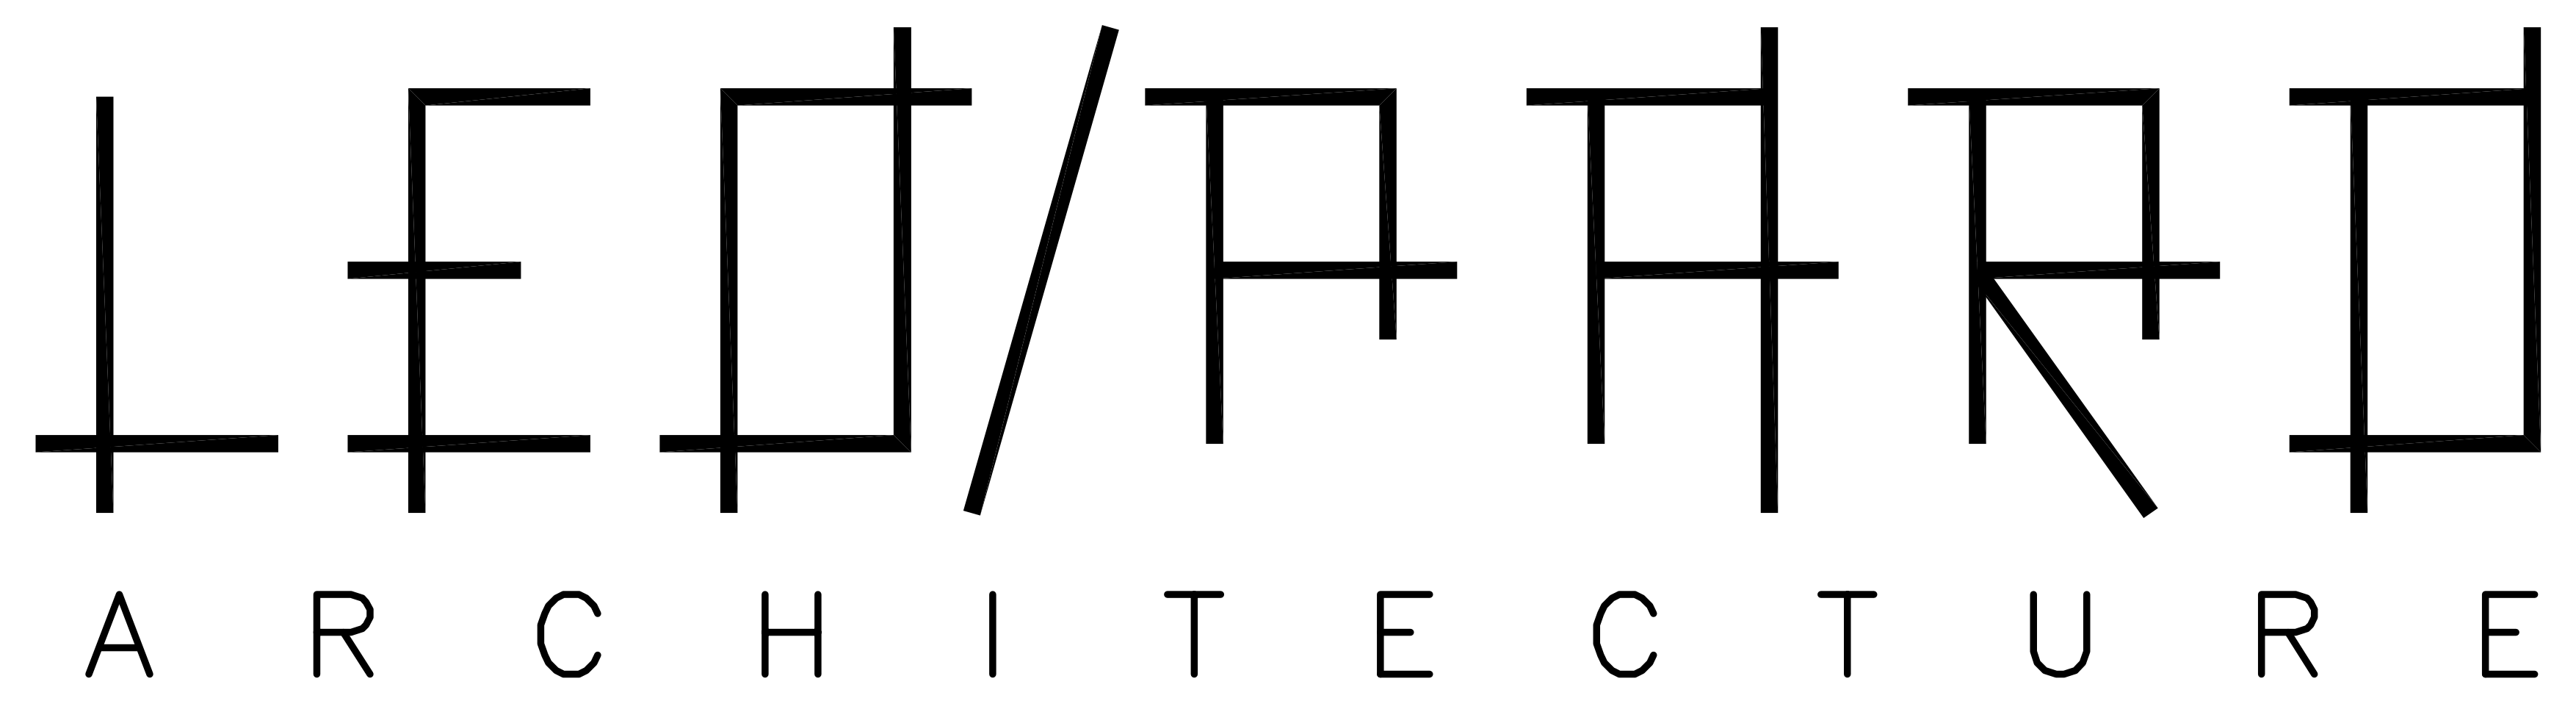 Leopard Architecture logo